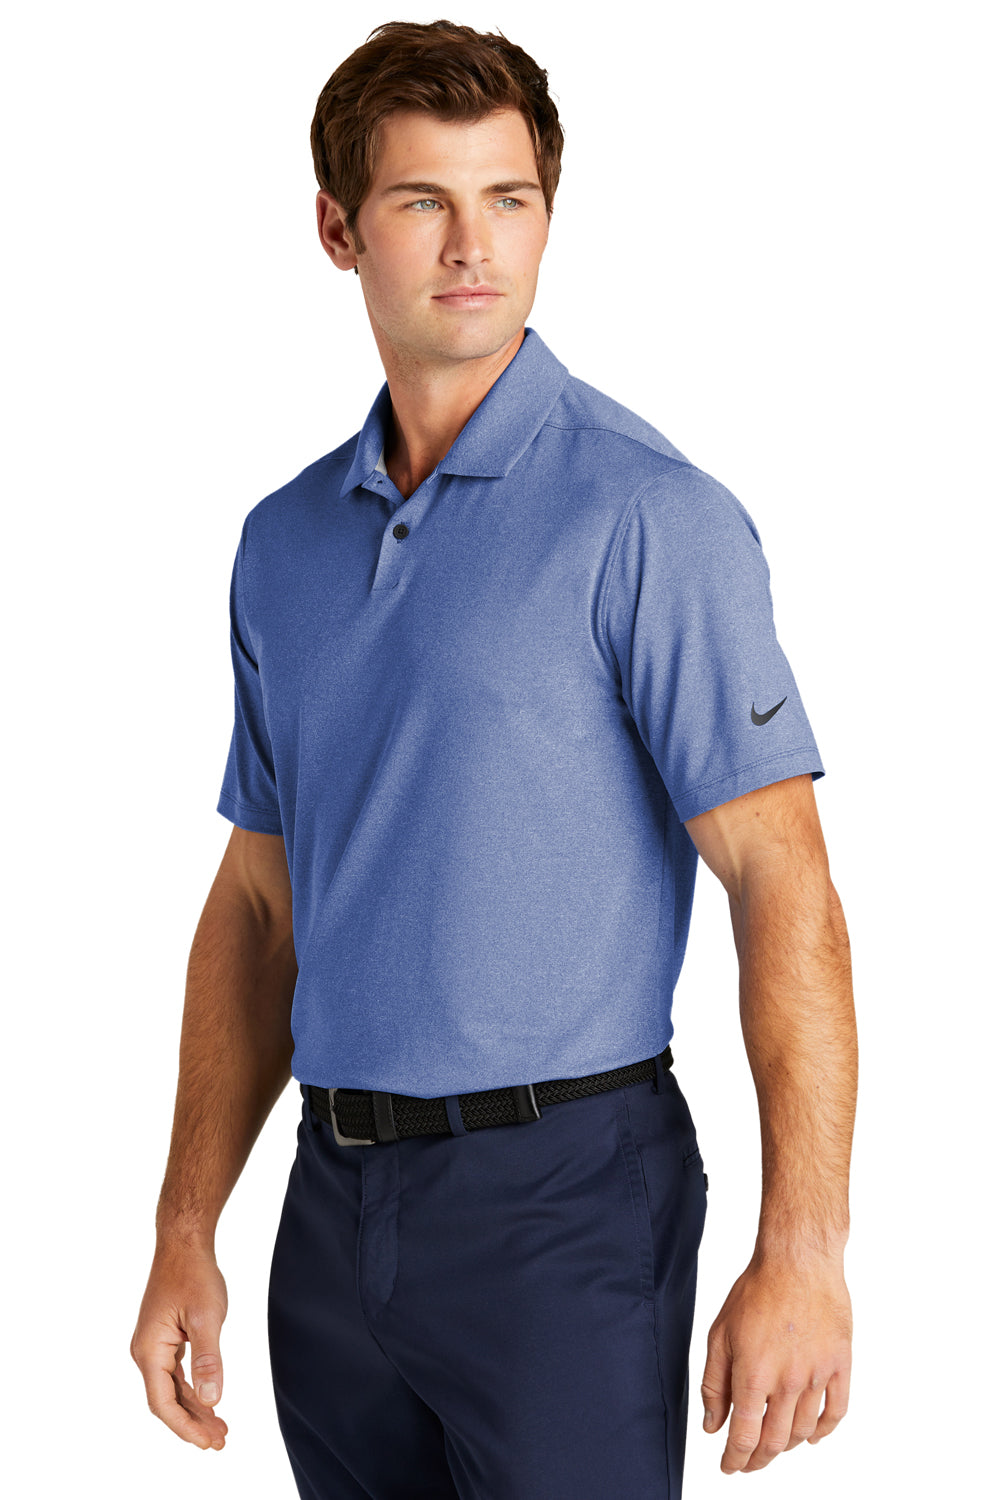 Nike NKDC2108 Mens Vapor Dri-Fit Moisture Wicking Short Sleeve Polo Shirt Heather Game Royal Blue Model 3Q